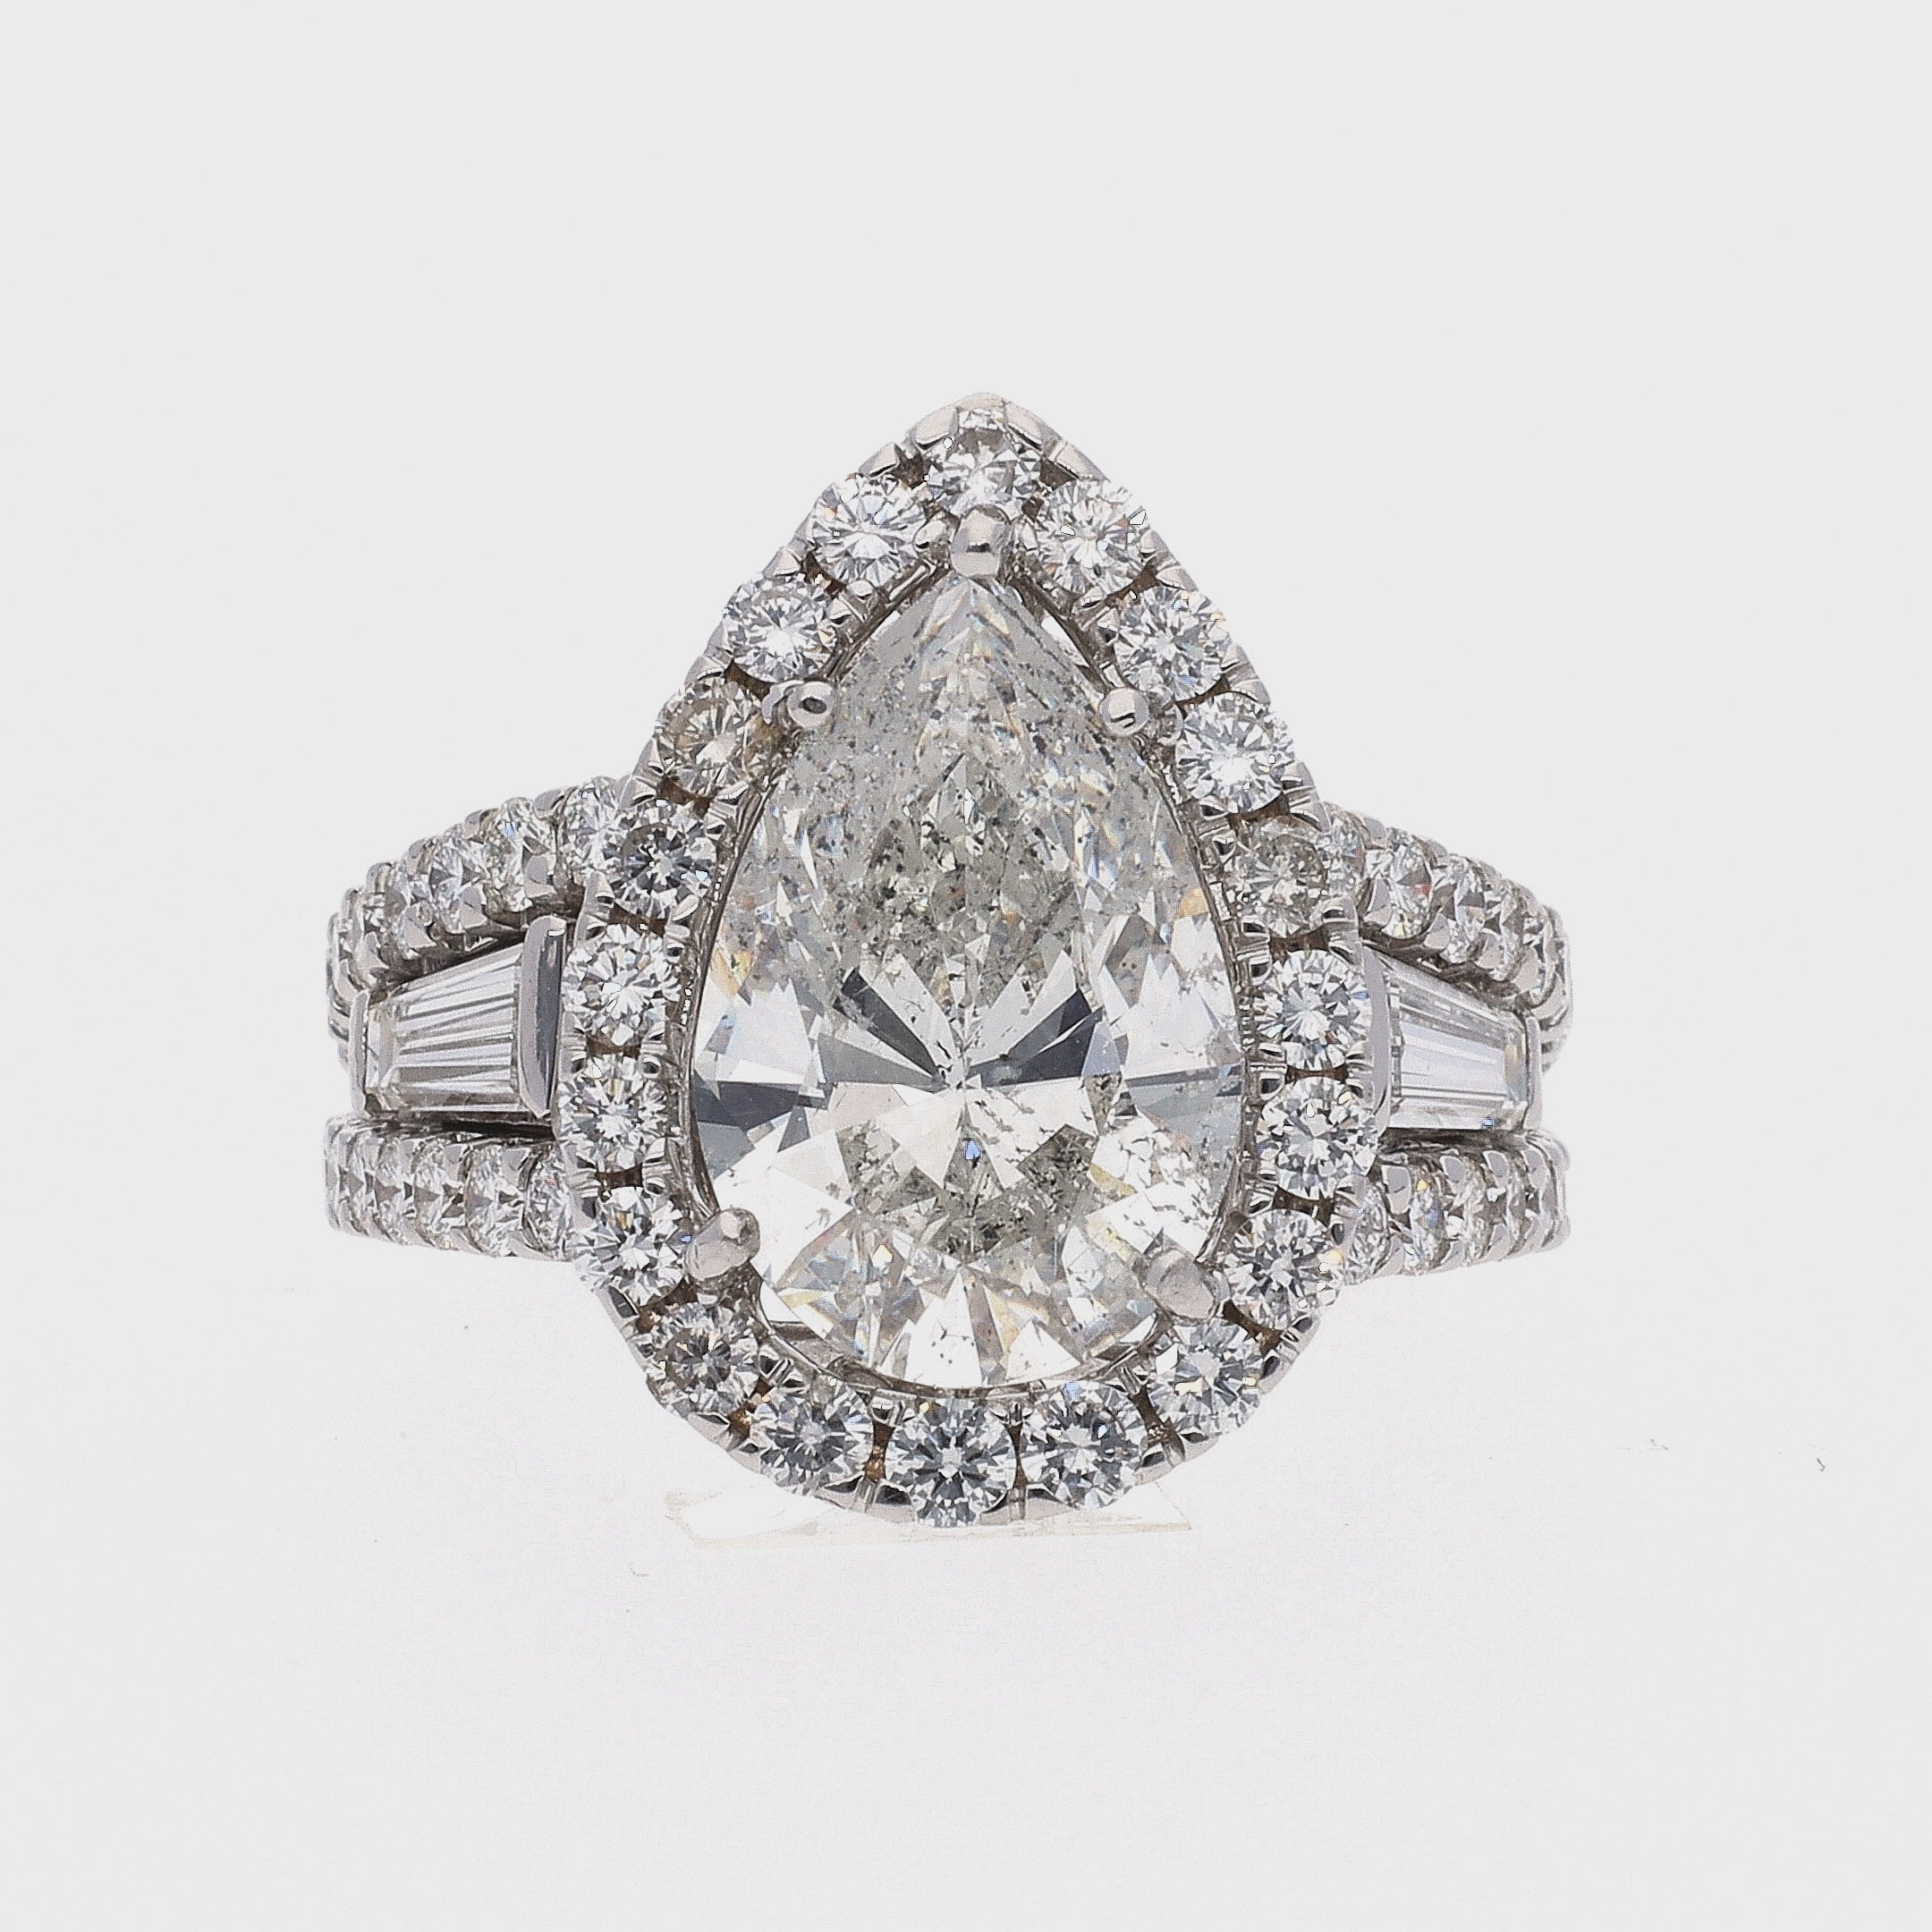 Vintage 18K White Gold 5.09ct Center Pear Diamond Fashion/Engagement Ring